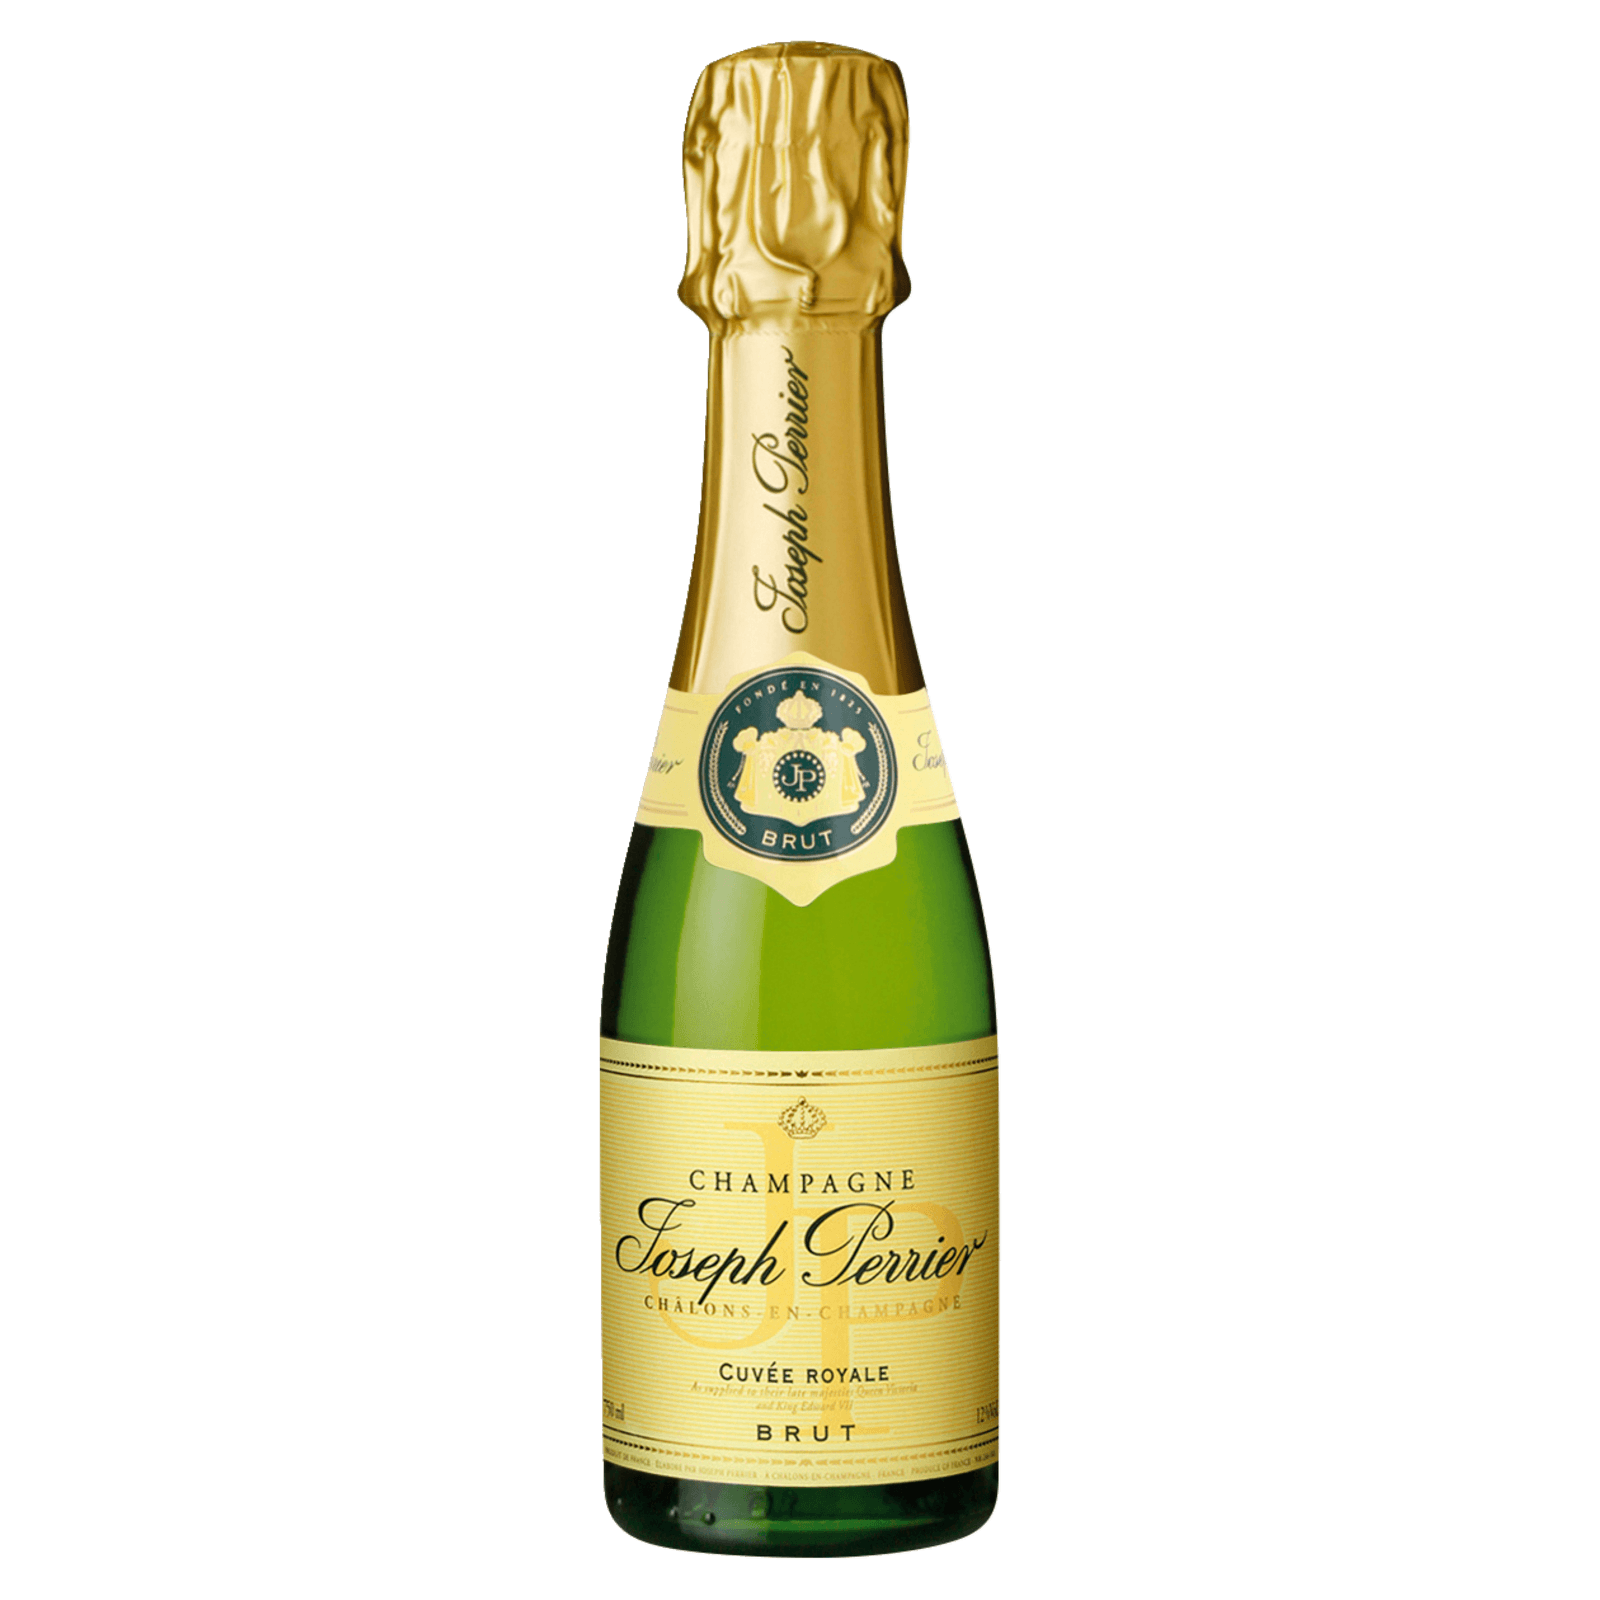 22,99€ Lidl Héritage Cuvée Champagne von 1730 Chanoine brut, Champagner für